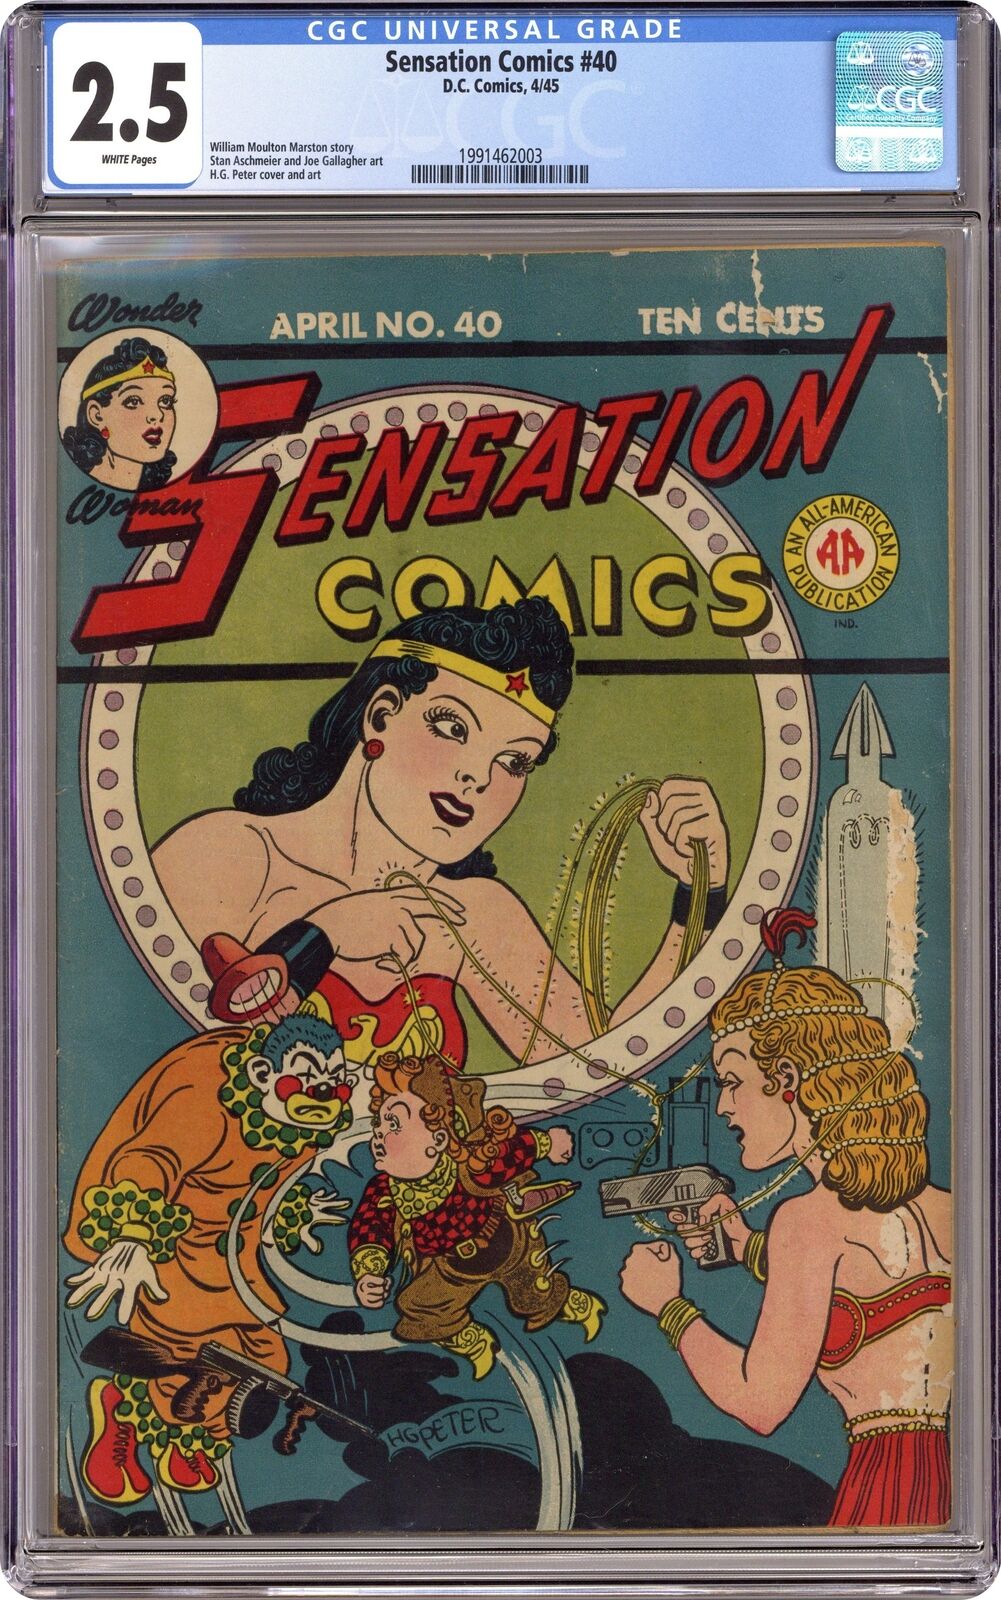 Sensation Comics #40 CGC 2.5 1945 1991462003